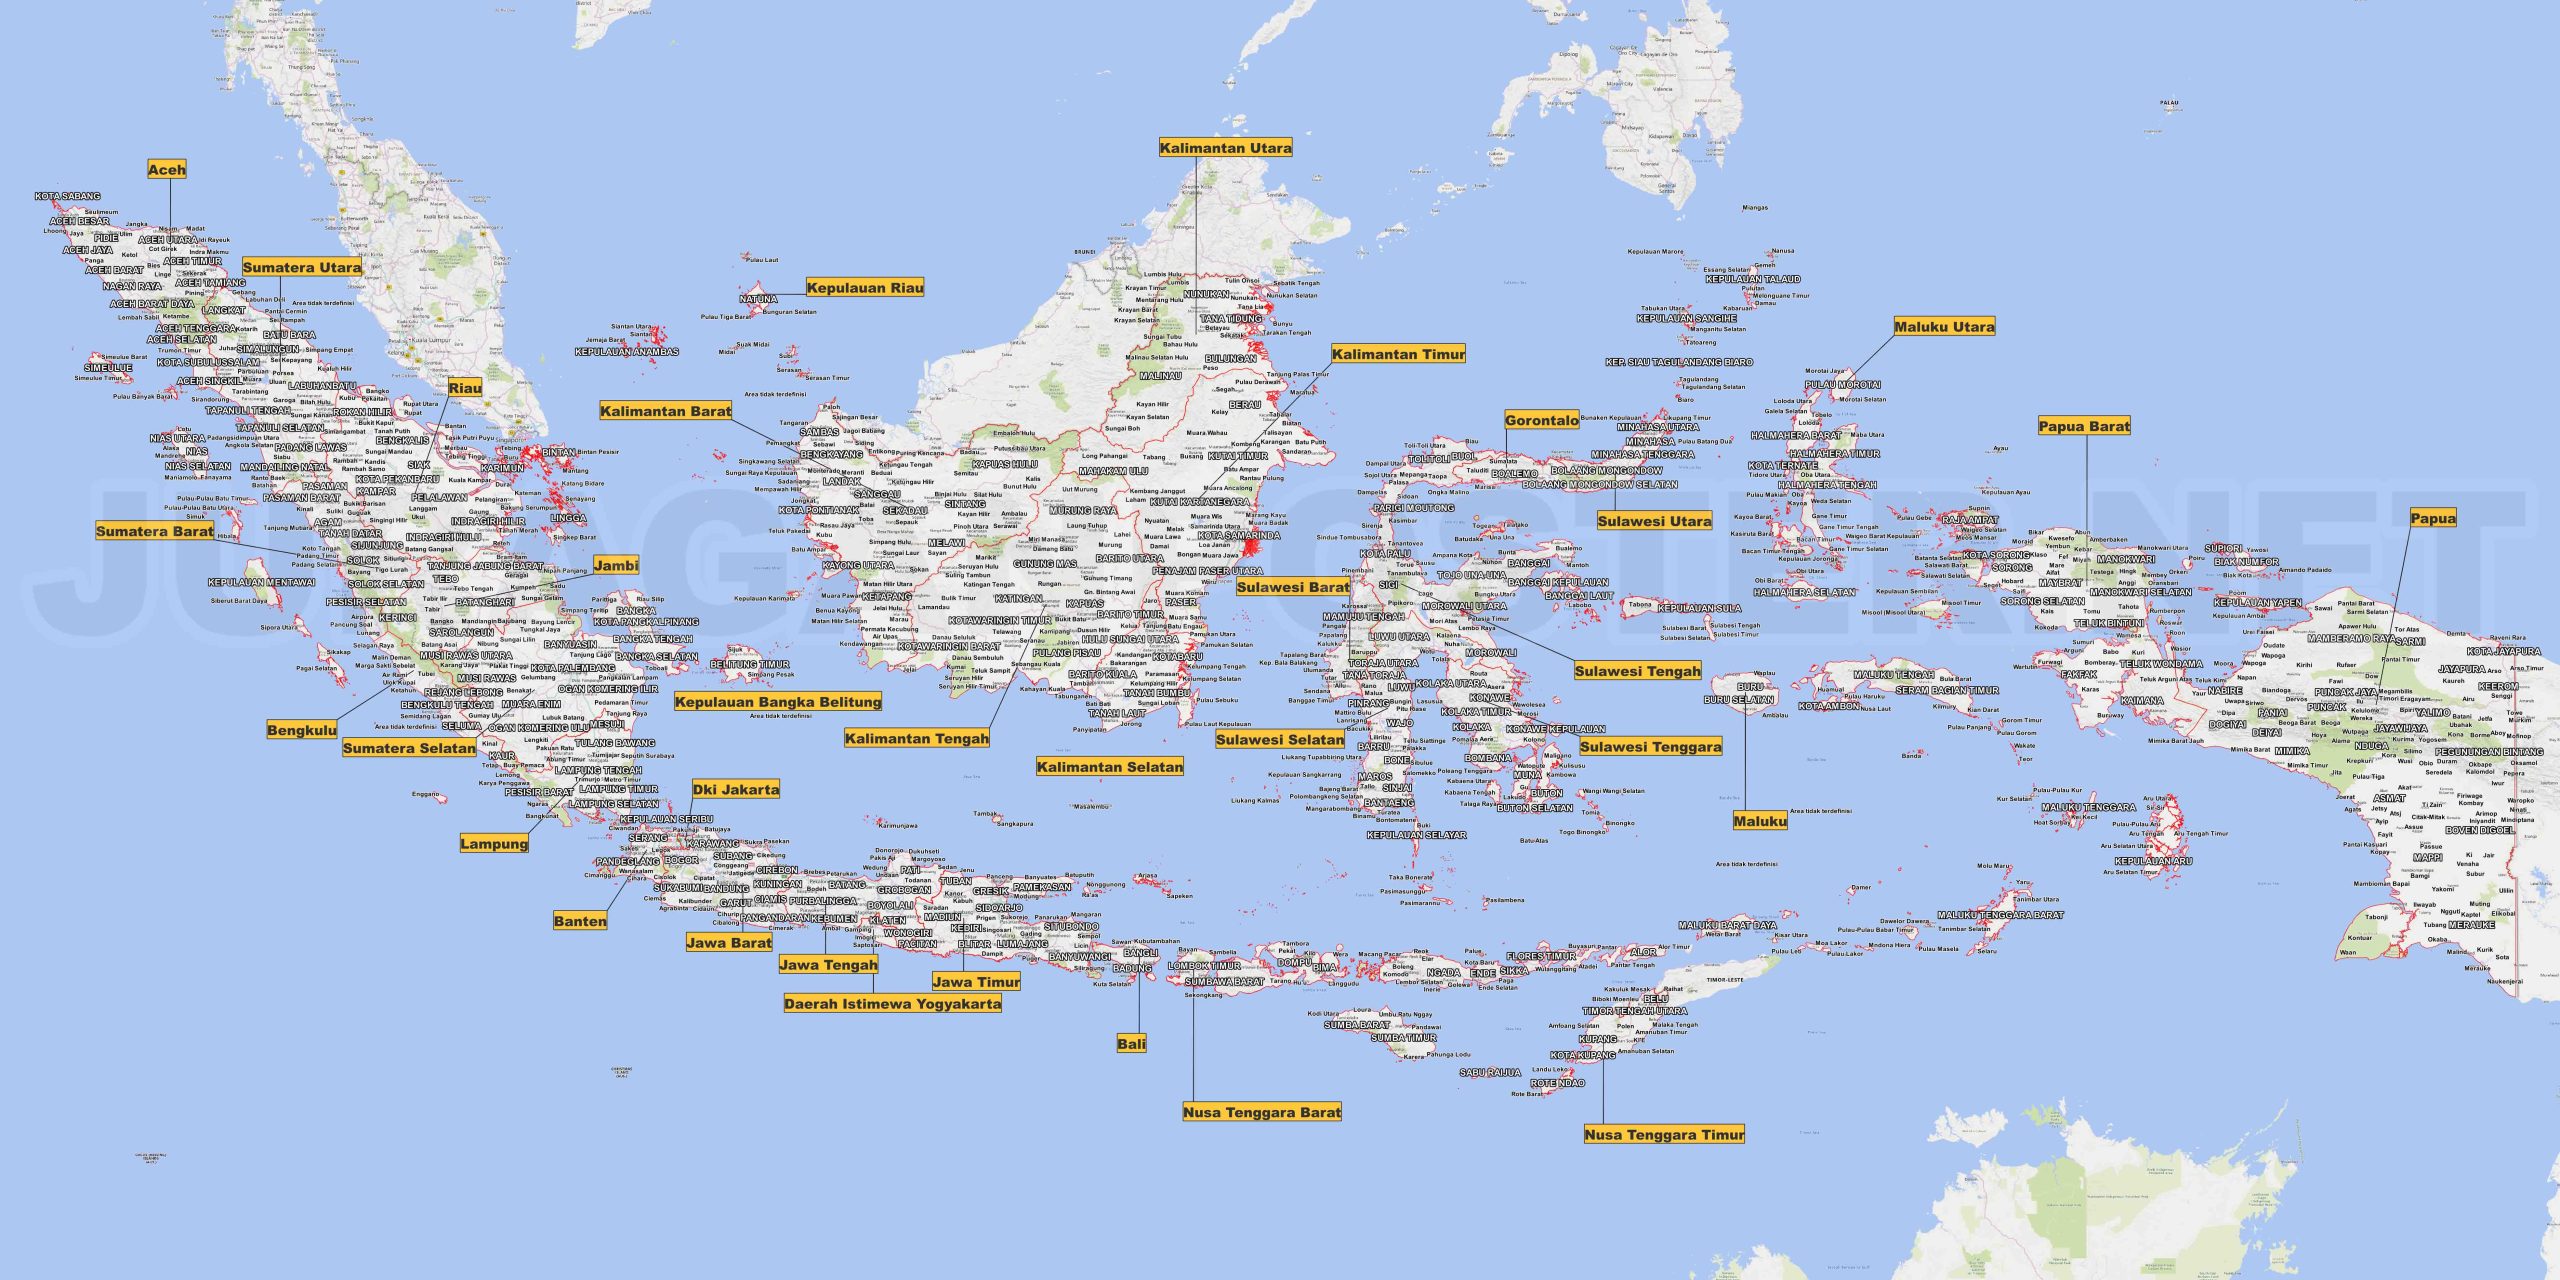 Gambar Peta Buta Indonesia: Mengenal Nama-nama Wilayah